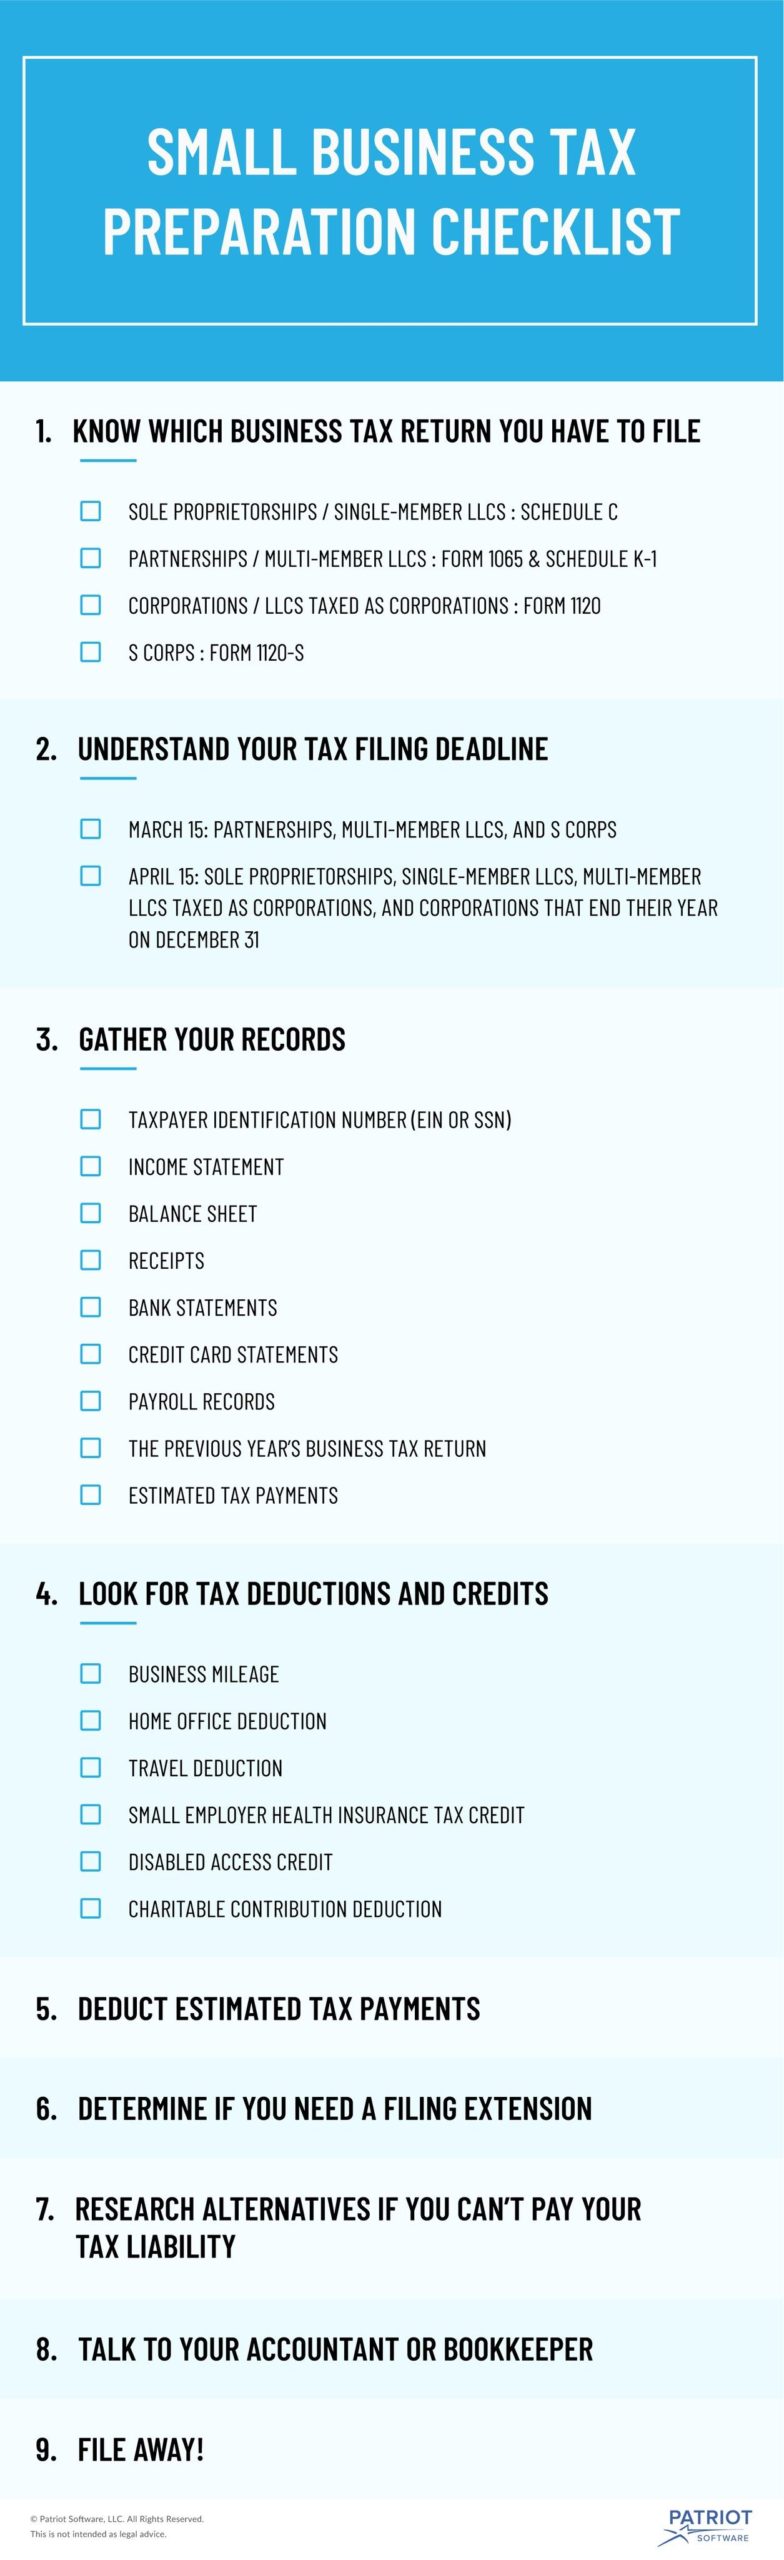 small business tax preparation checklist 